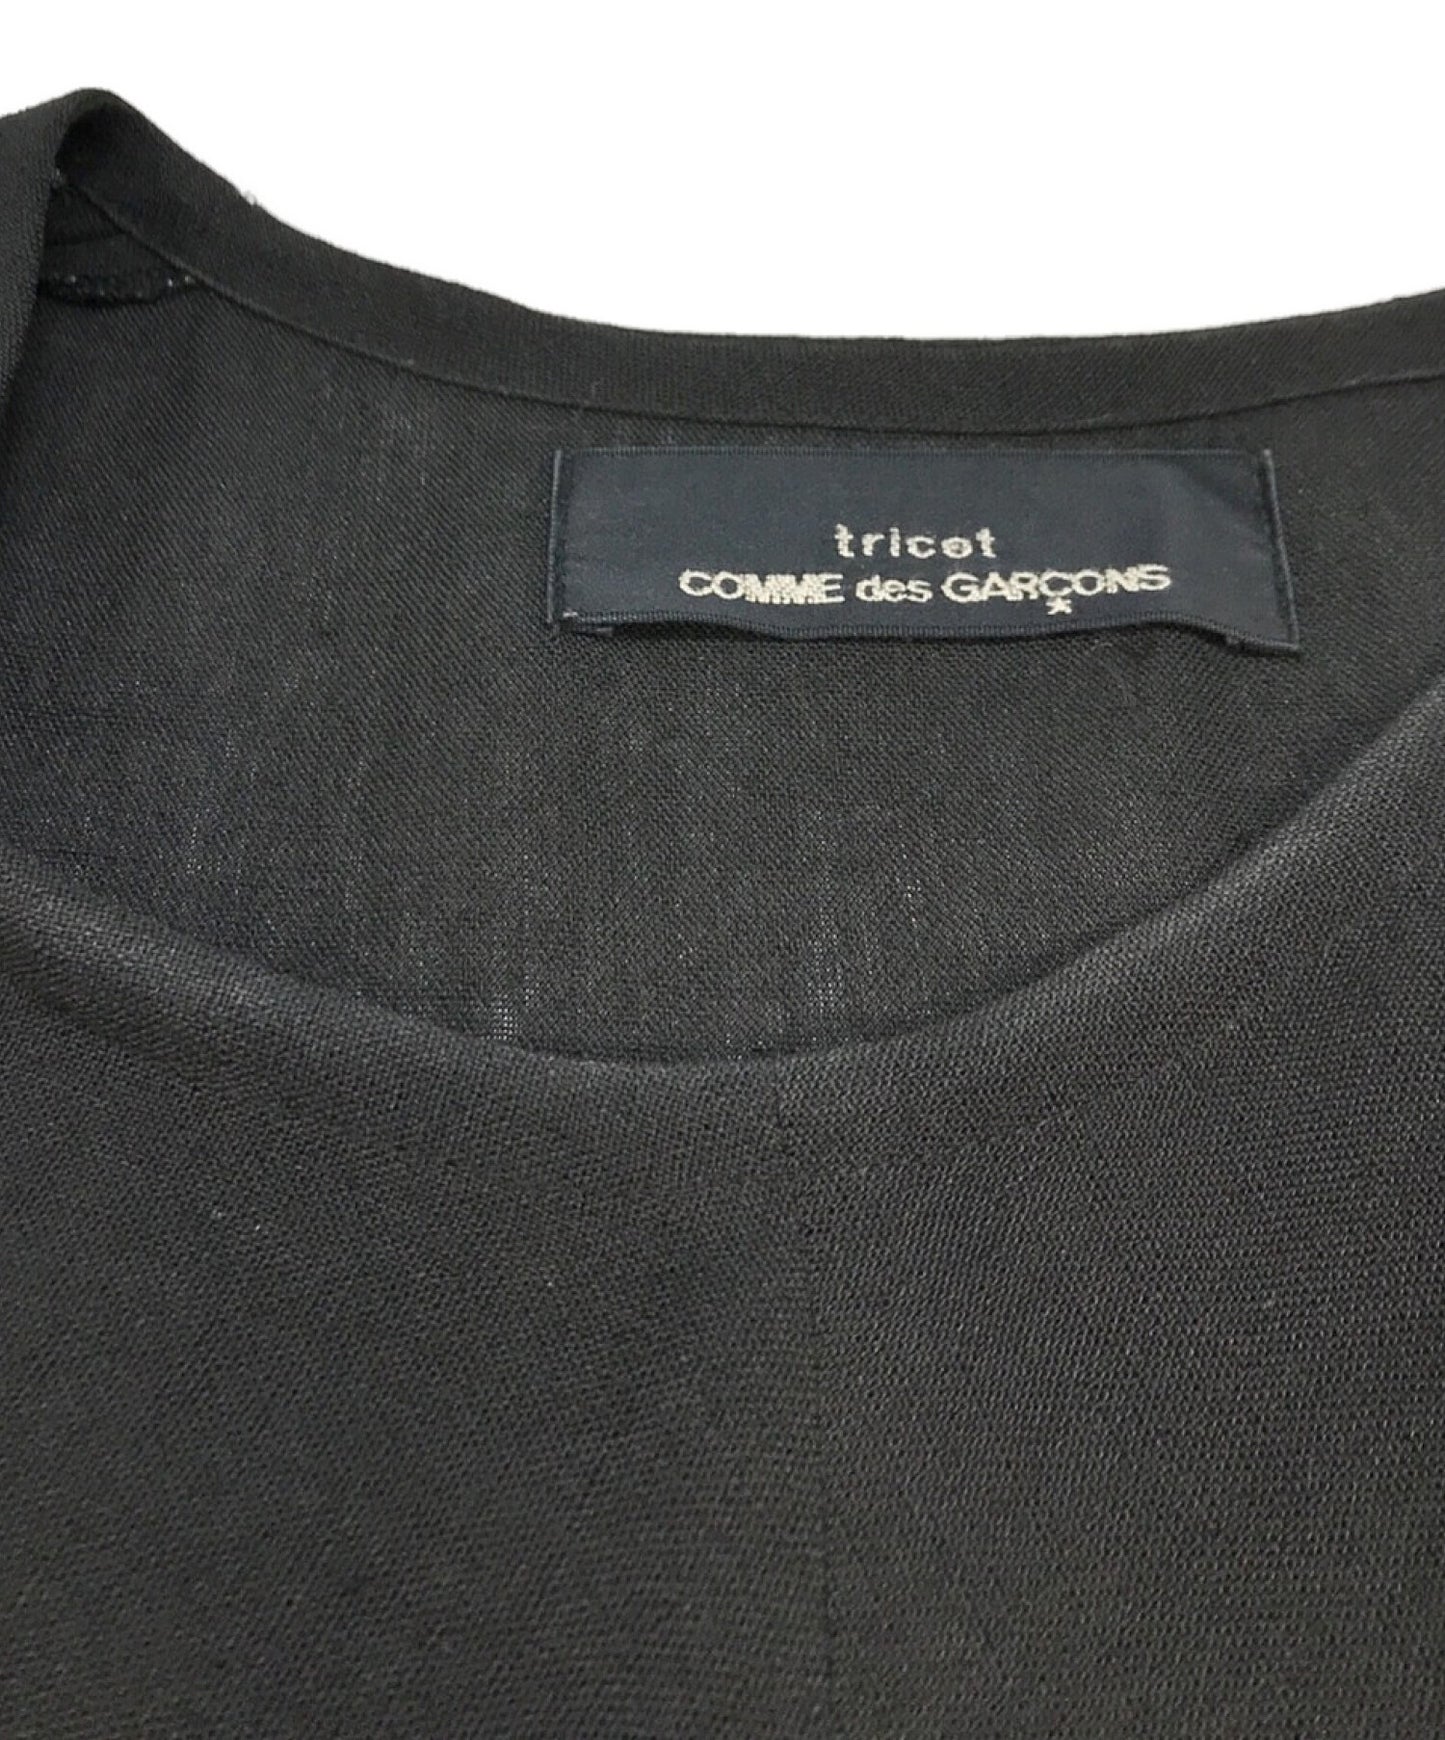 Tricot Comme des Garcons 짧은 소매 프러플 긴 드레스 T0-020170